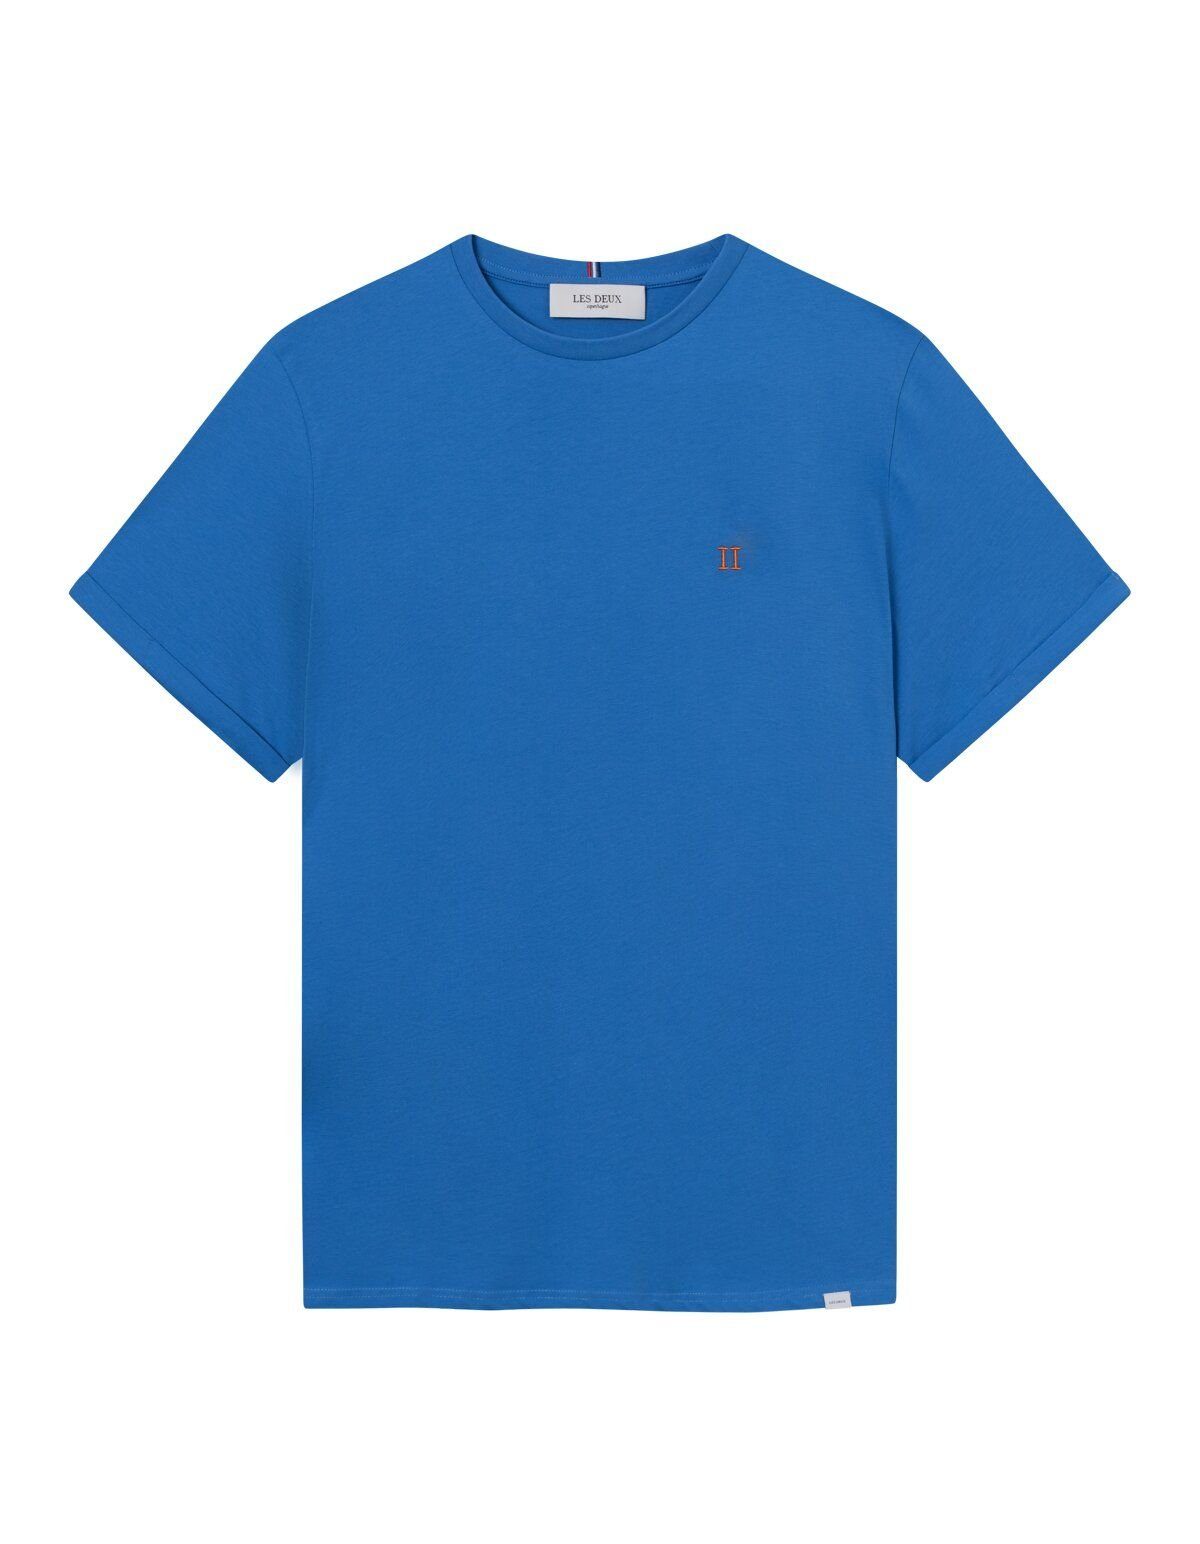 Les Deux T-Shirt atmungsaktiv 471730-Palace reine Blue/o Bauumwolle